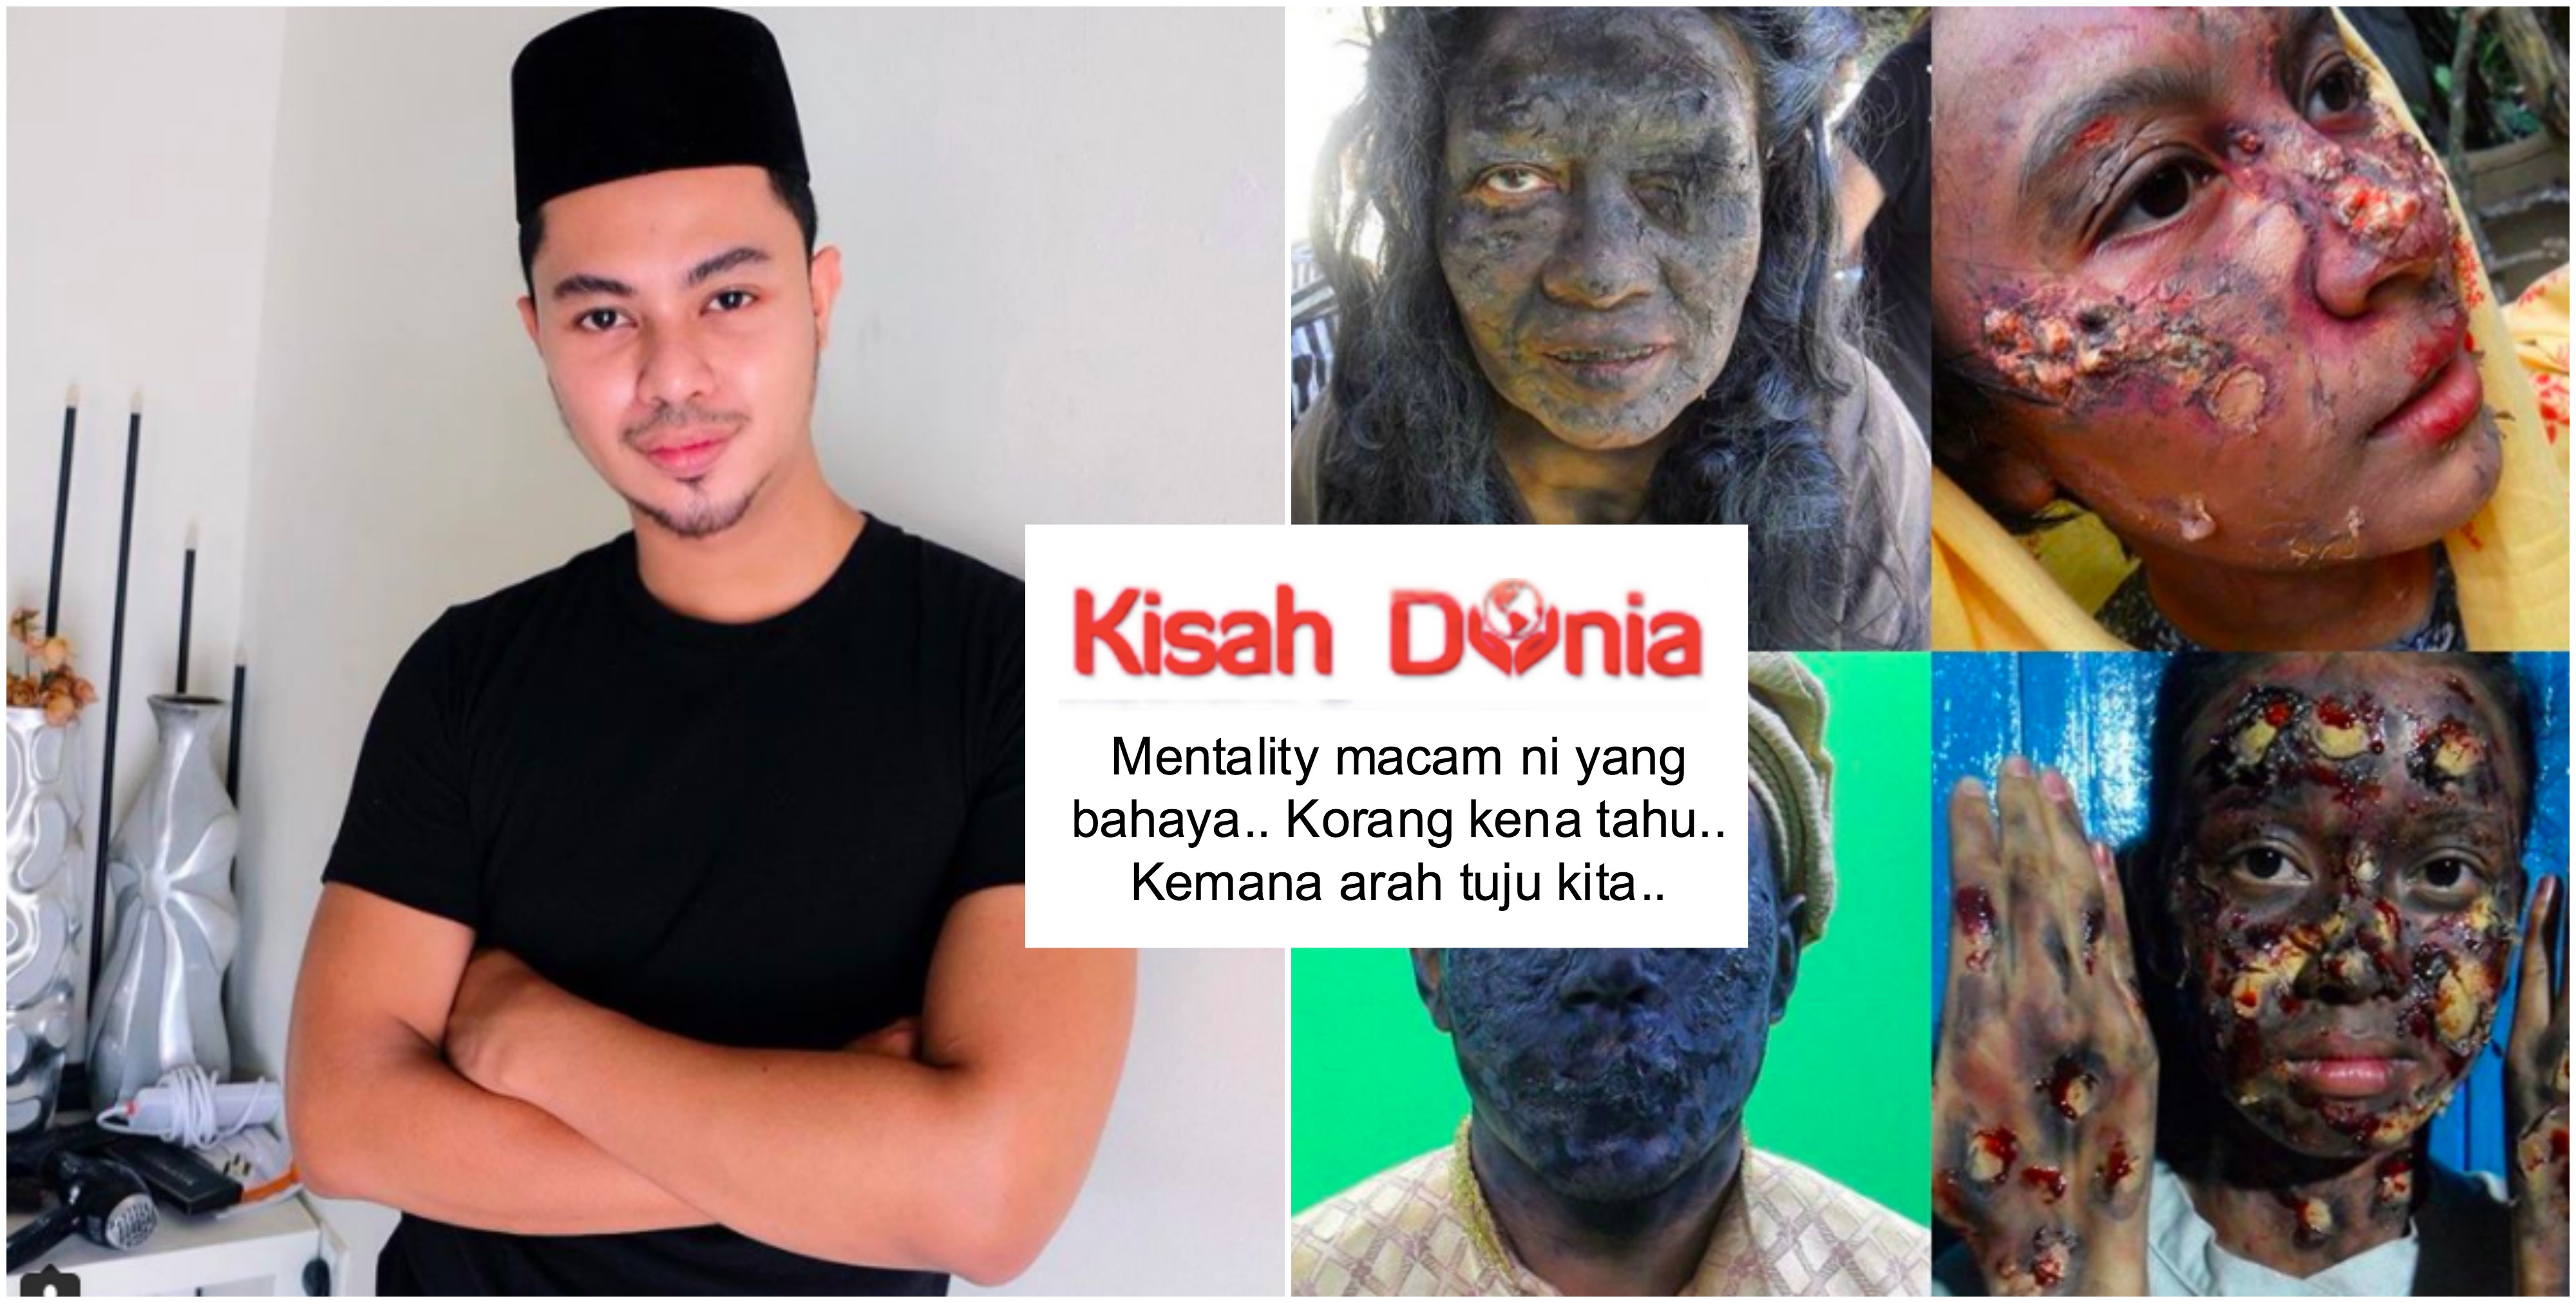 'Ala Nak Jadi Makeup Artis, Tak Payah Belajar Tinggi' - Makeup Artis Terkenal Kongsi Pengalaman Awal Cebur Bidang Solekan 7